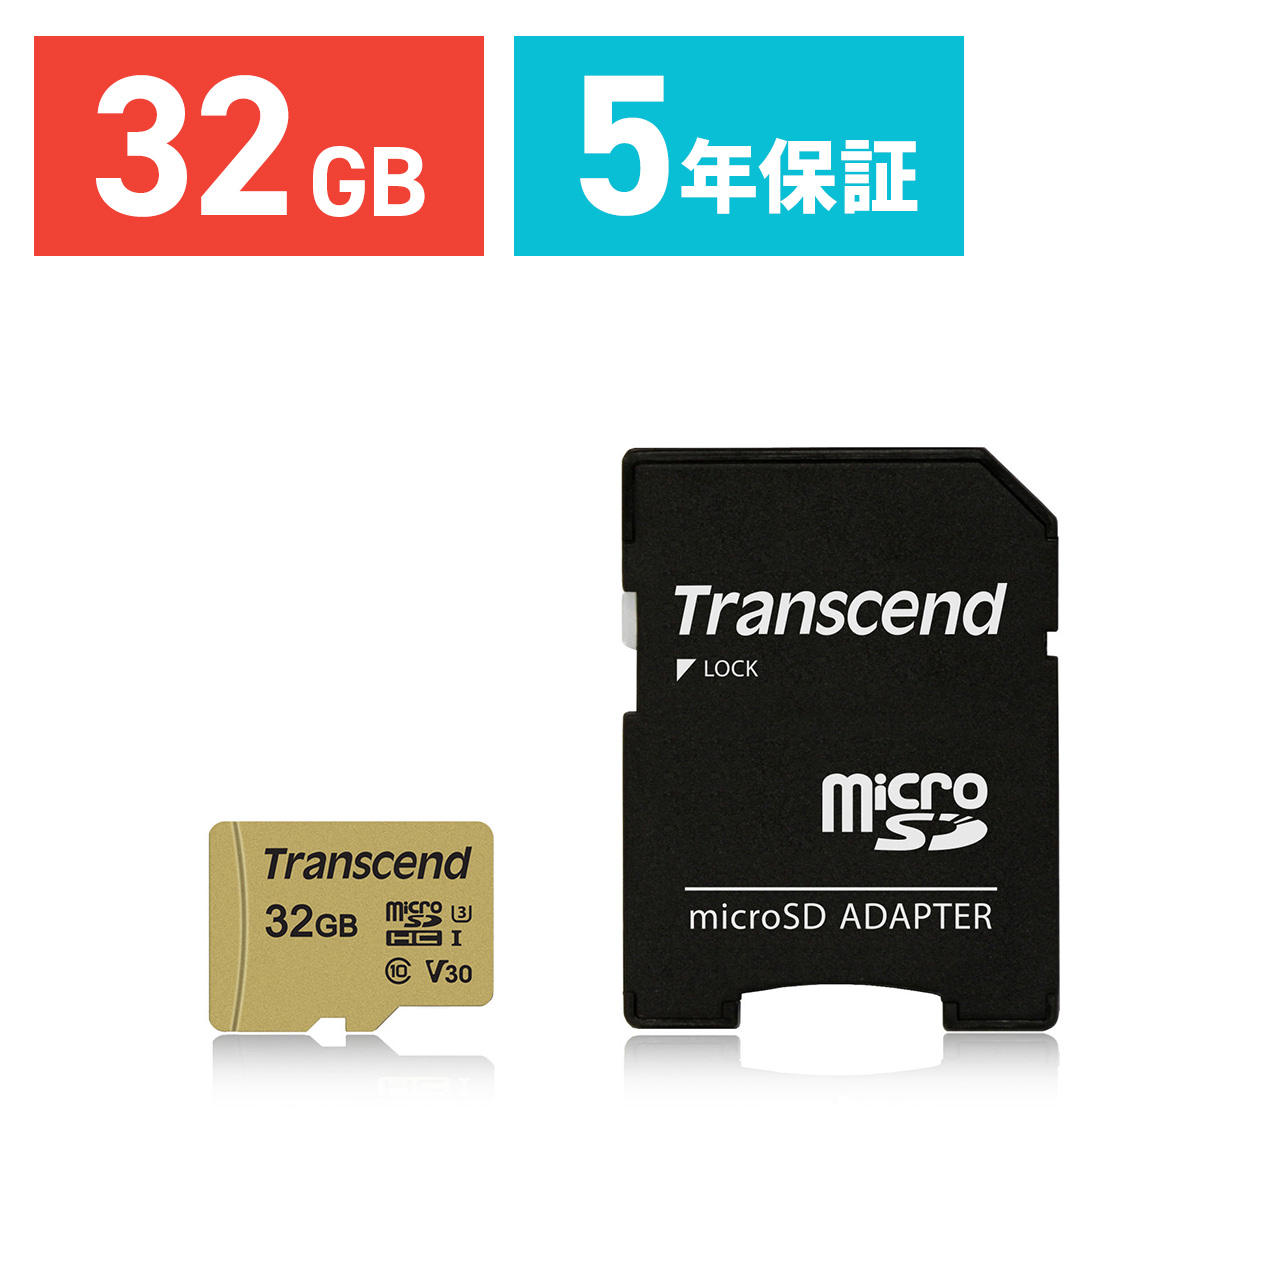 microSDカード 32GB microSDHC Class10 UHS-I U3 マイクロSD TS32GUSD500S